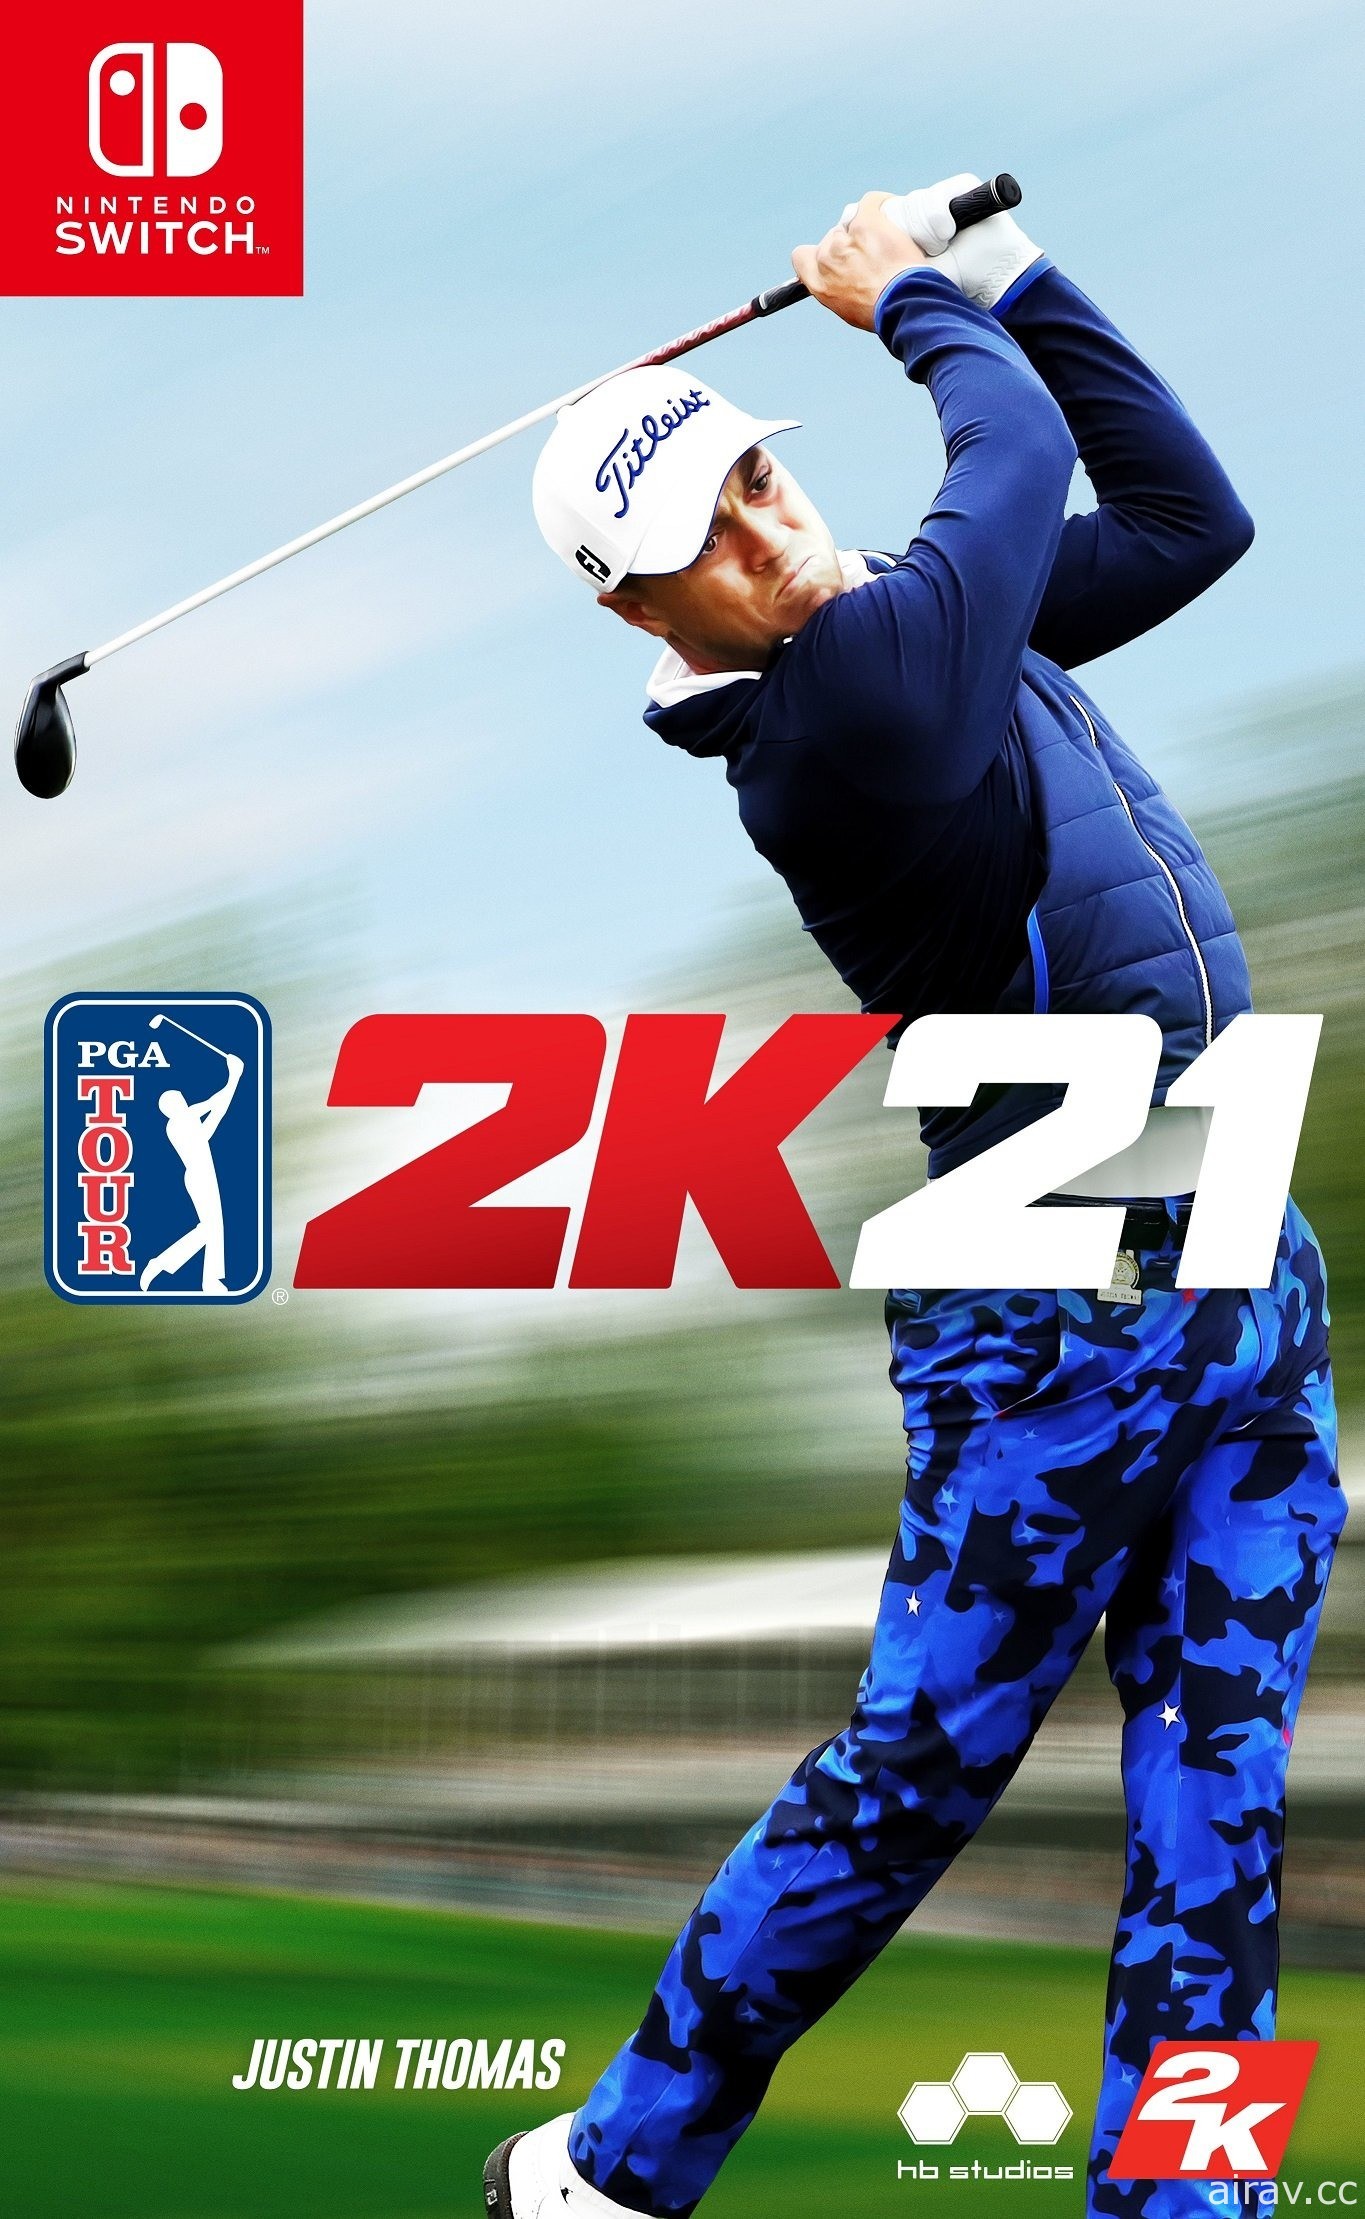 《PGA 巡迴賽 2K21》Nintendo Switch 實體版即日起在亞洲地區正式上市